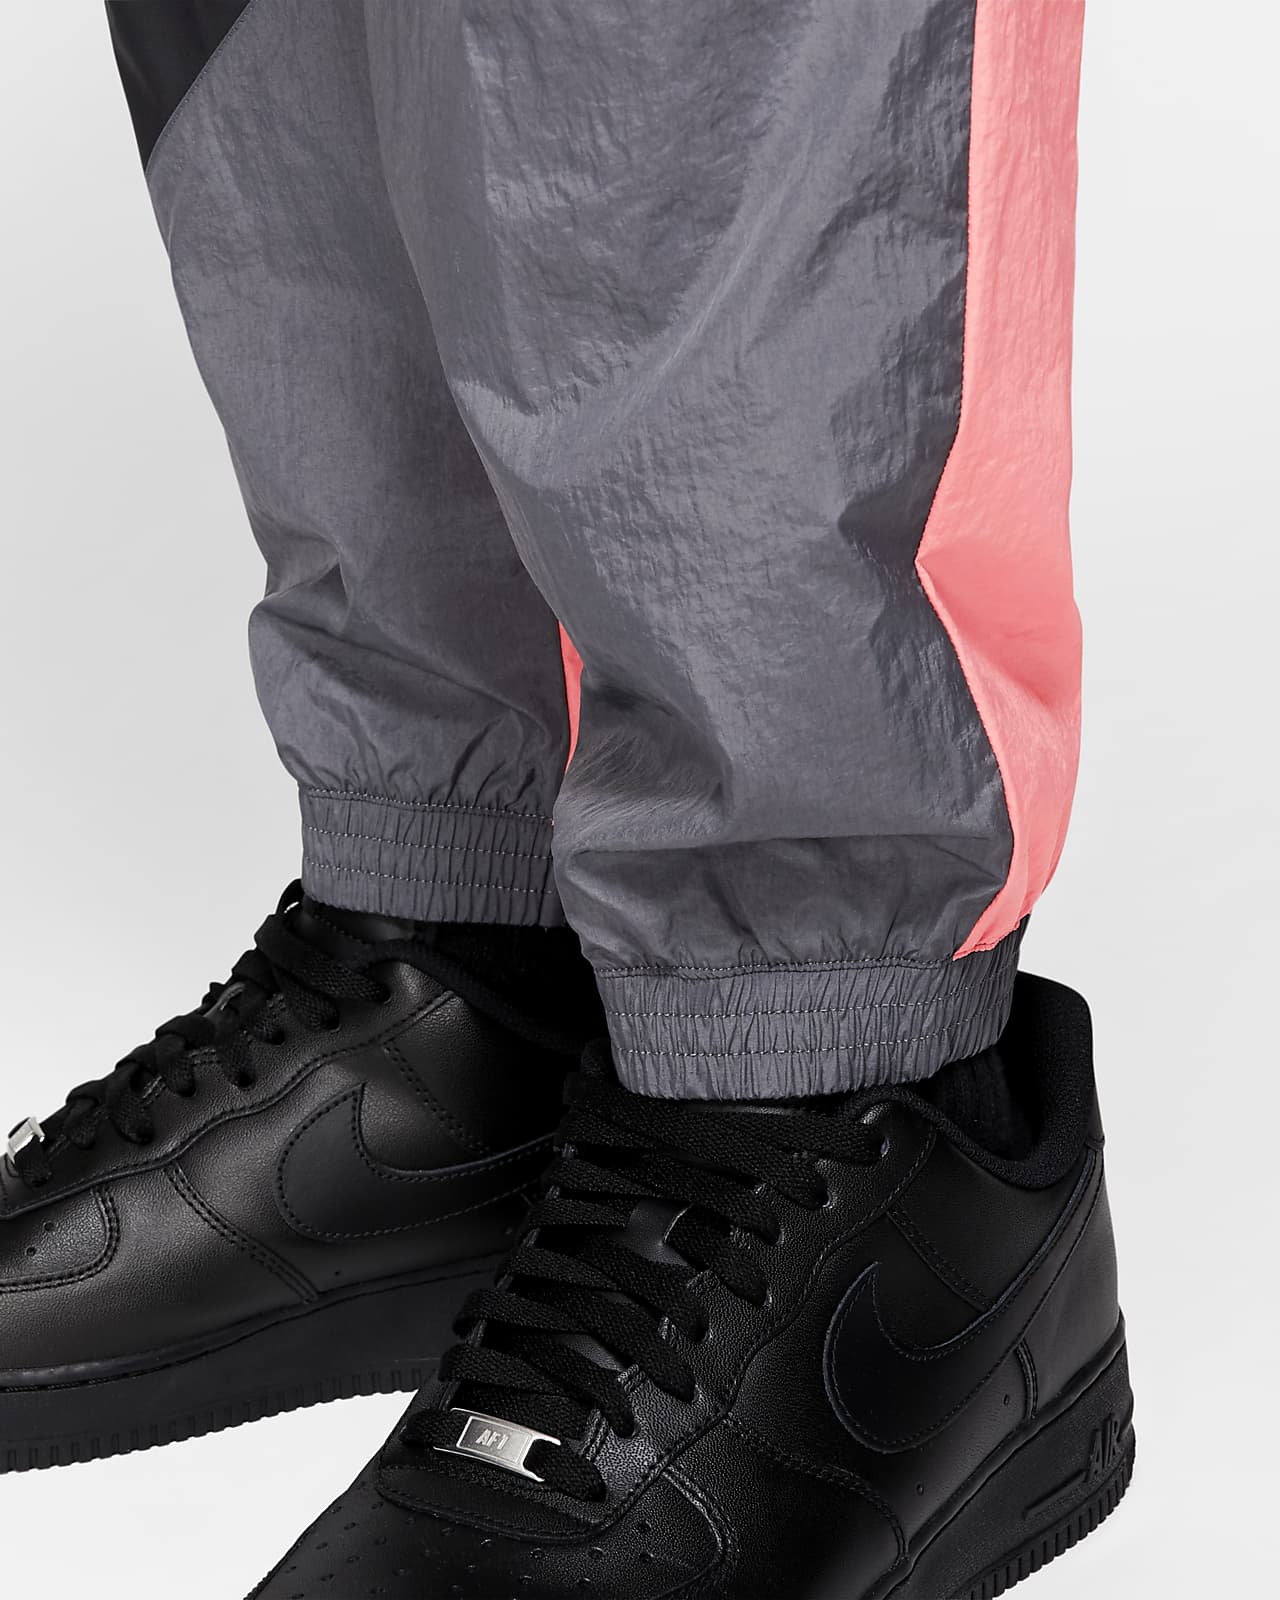 Men's Nike Air Swoosh Woven Track Pants